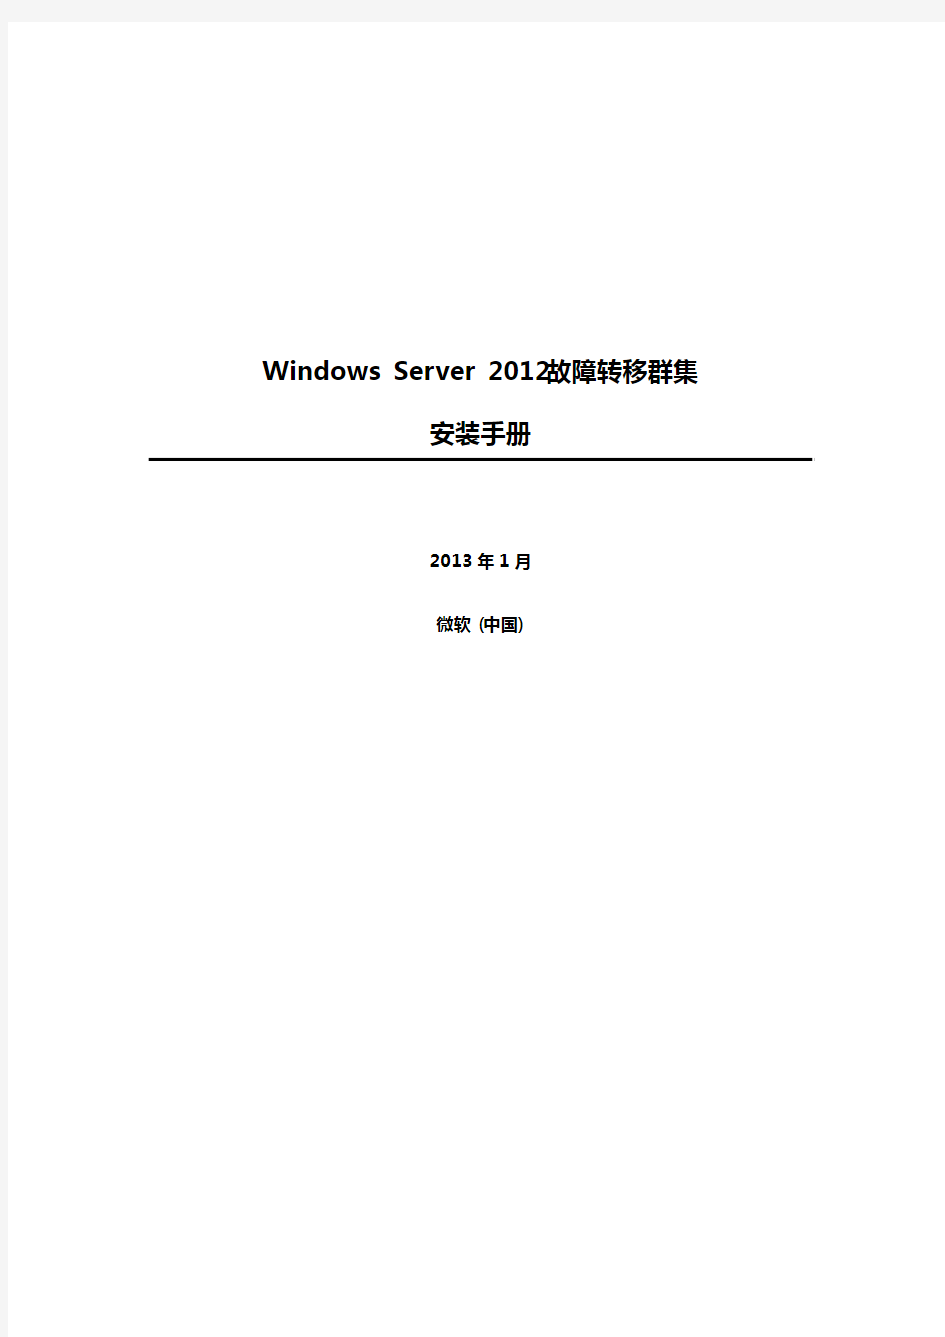 Windows Server 2012 故障转移群集 安装手册